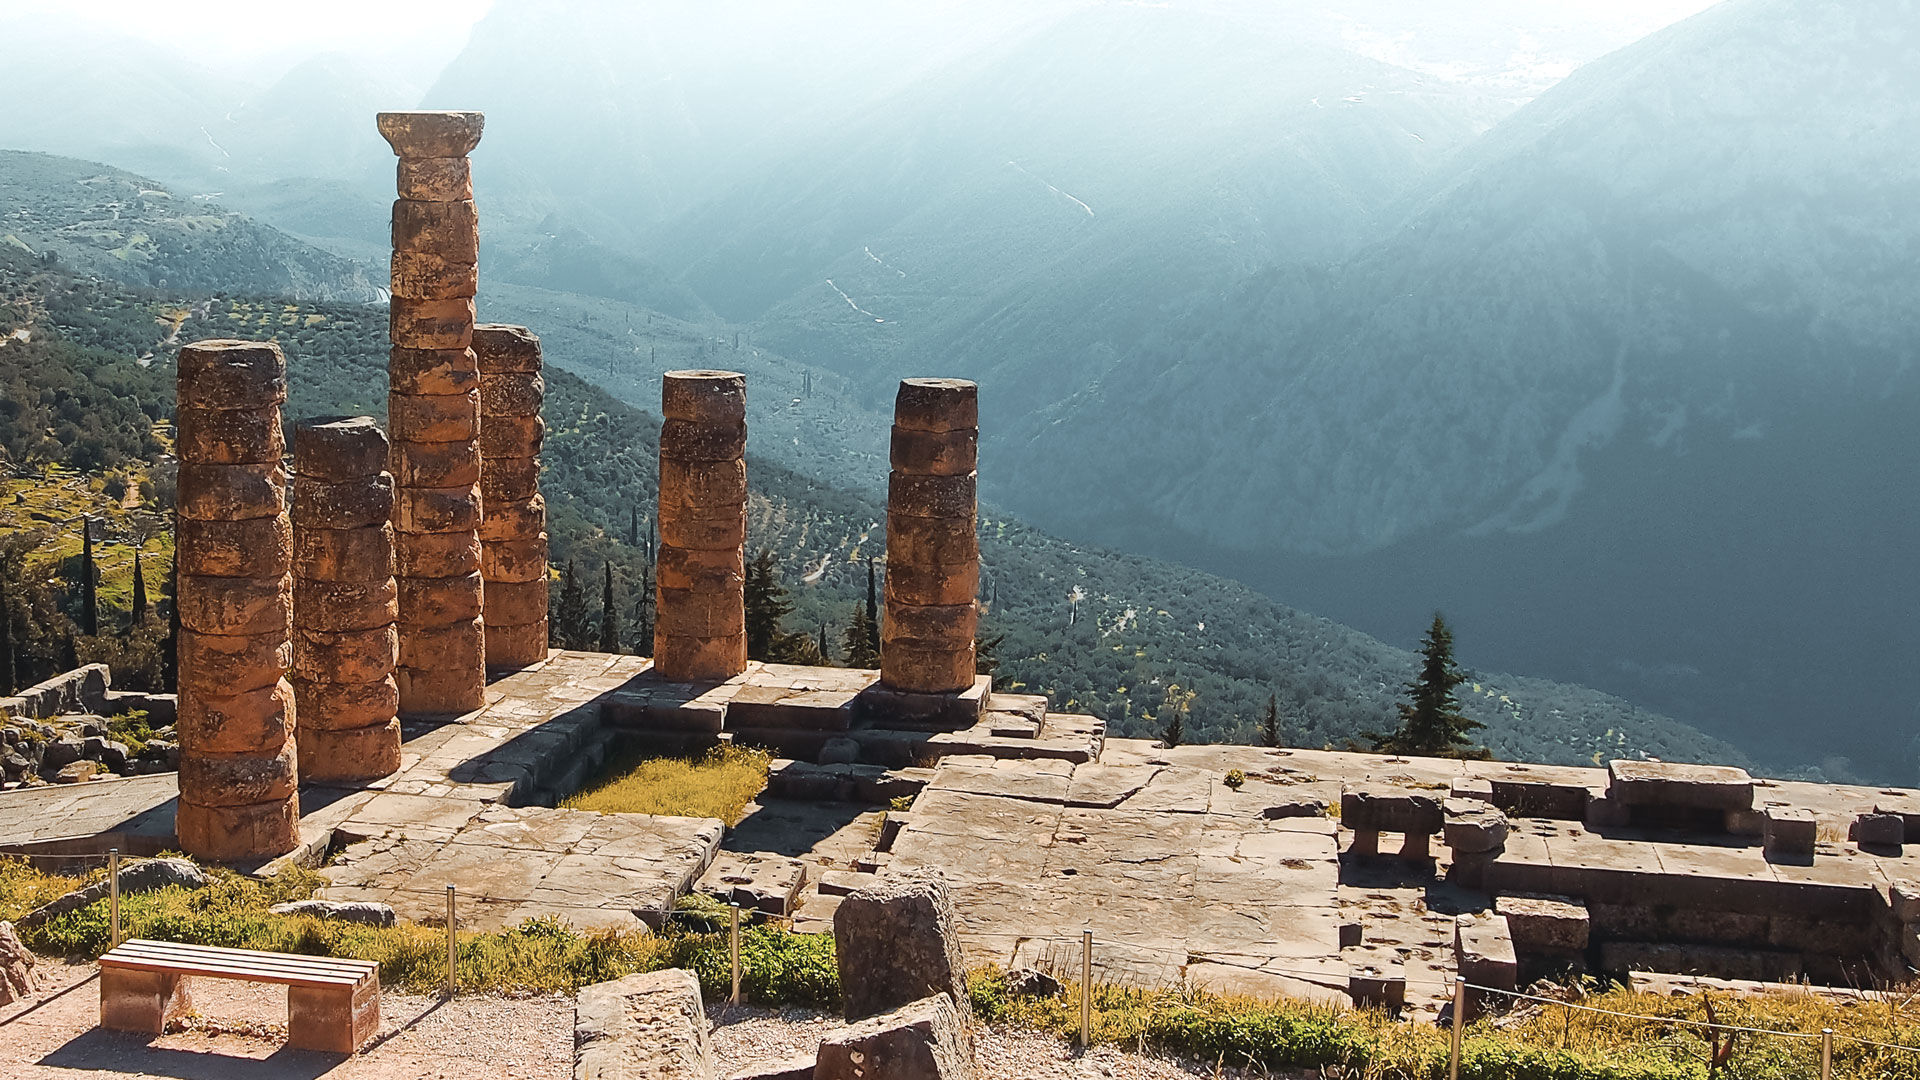 Six broken Doric columns remain of Delphi's most important structure, the Temple of Apollo